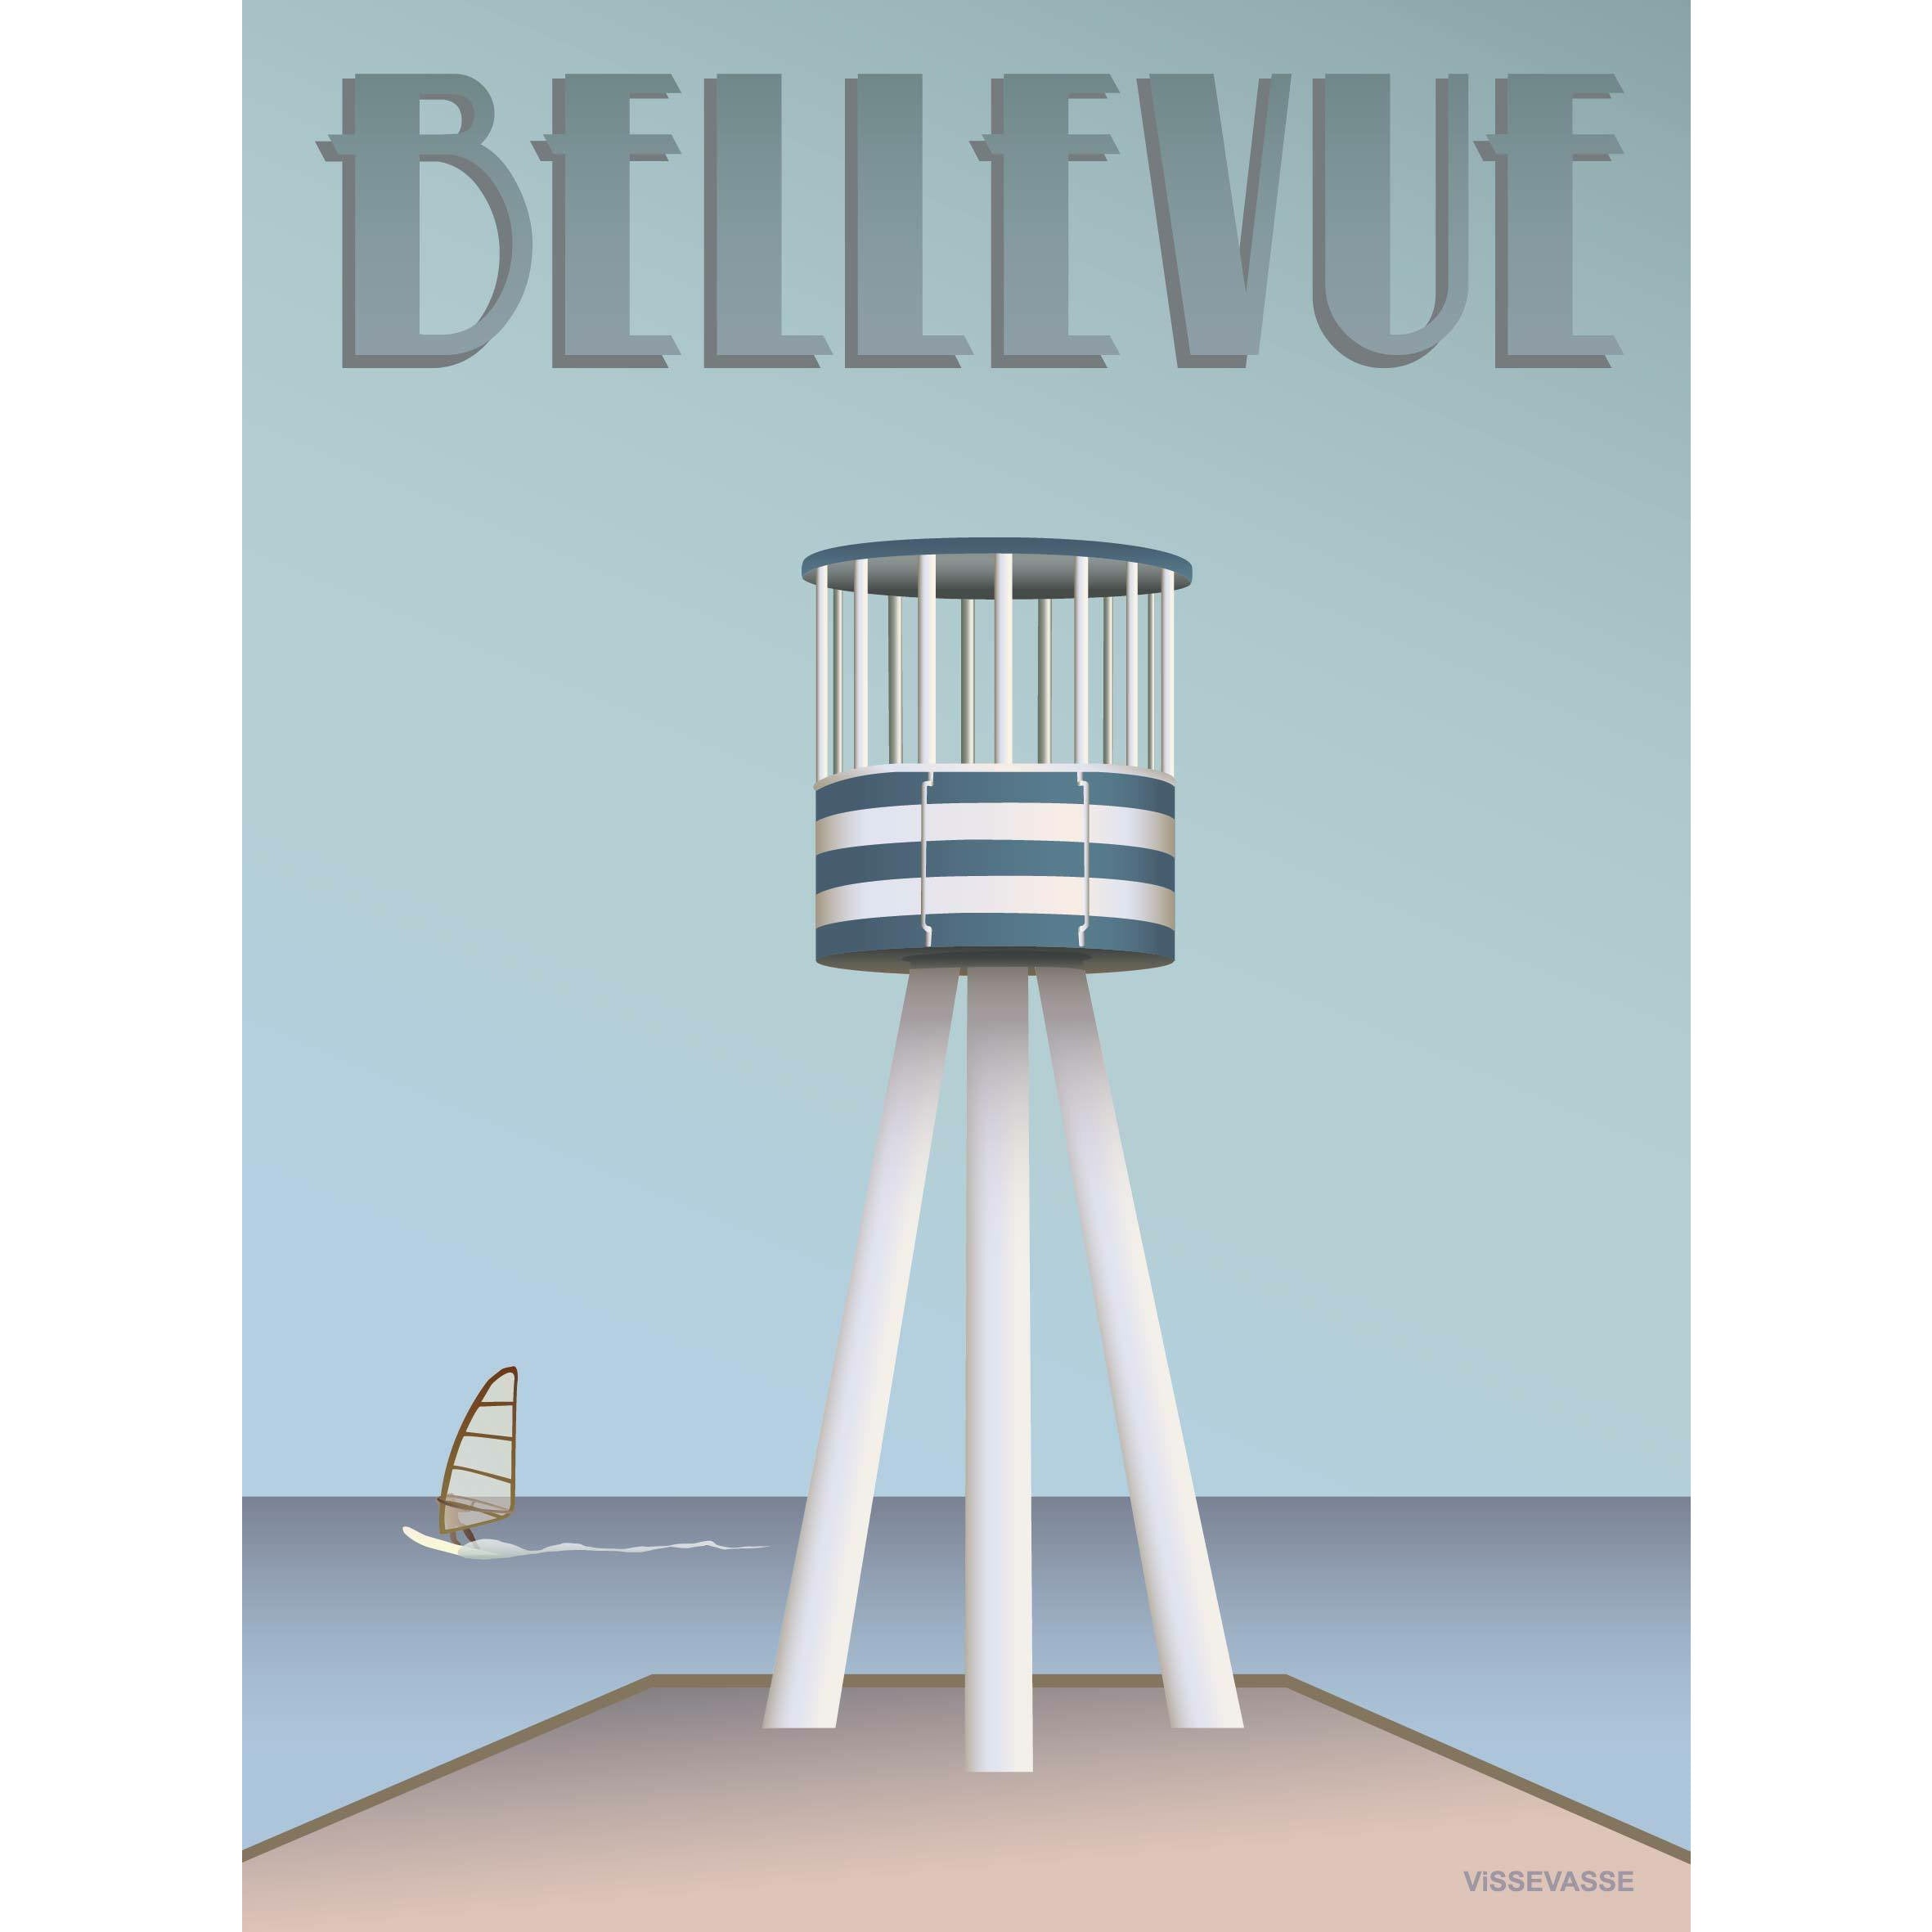 Vissevasse Bellevue Lifeguard Tower plakat, 70 x100 cm